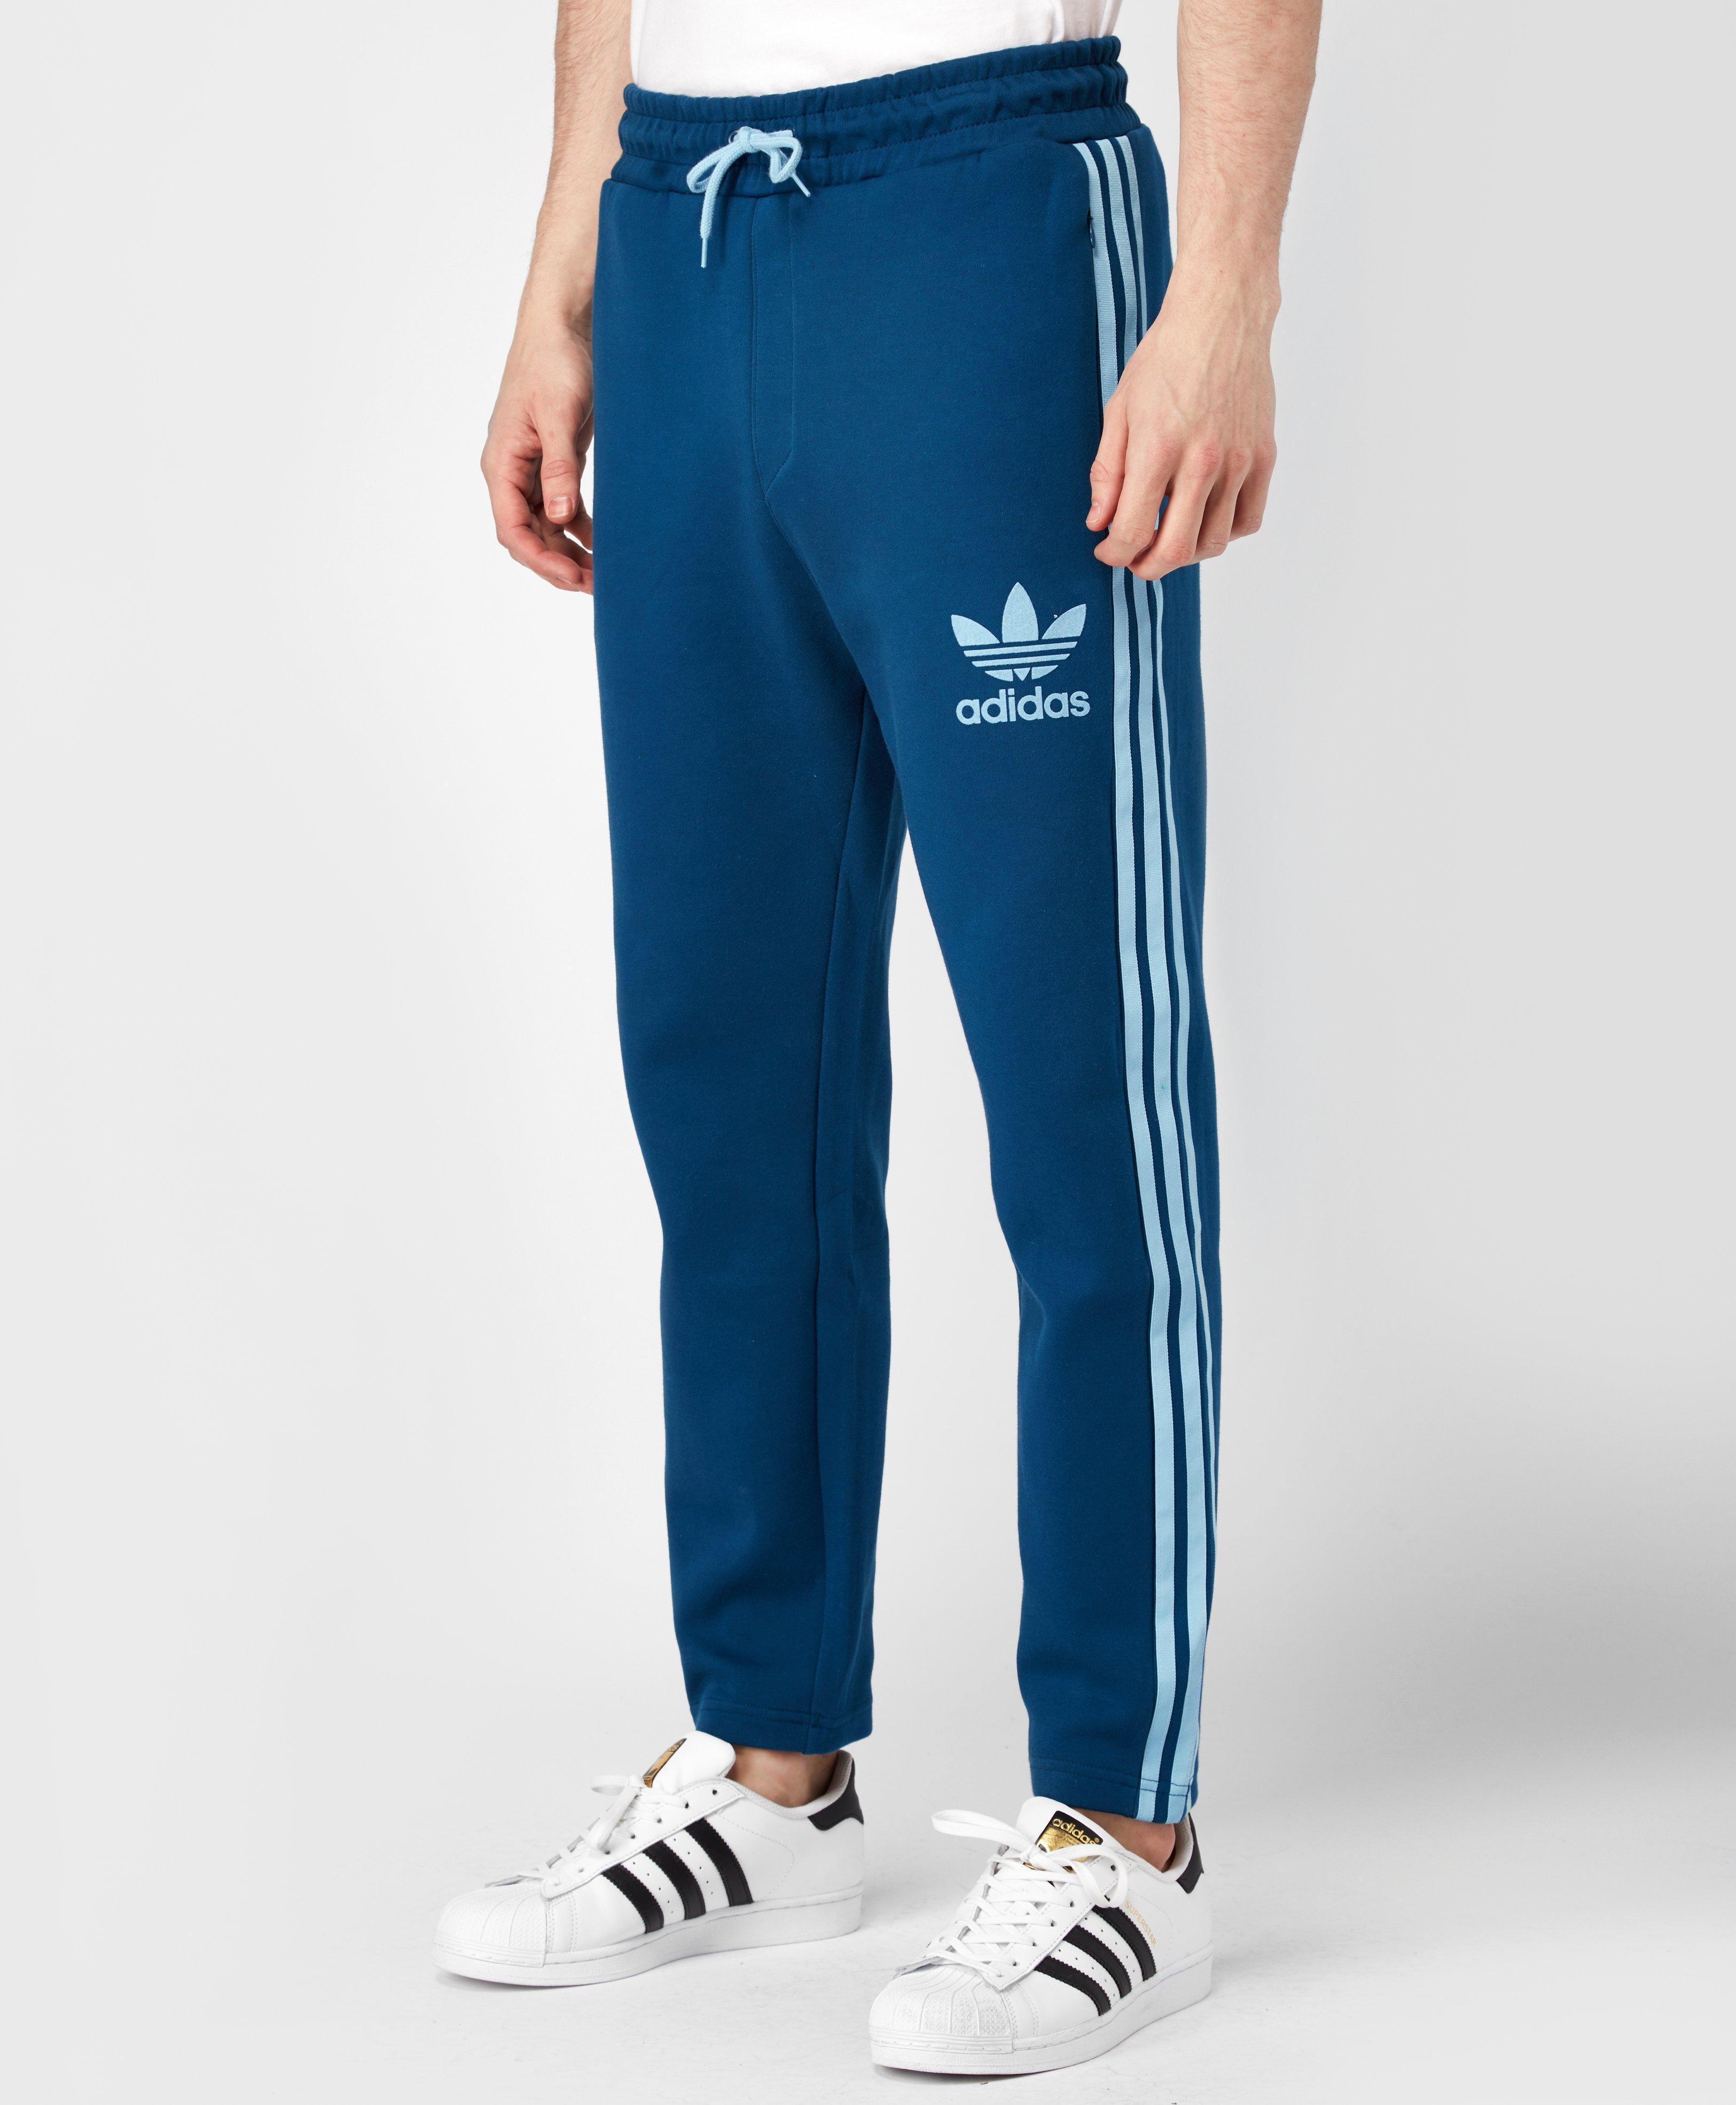 Lyst - Adidas originals Adicolor Fashion Track Pants in Blue for Men